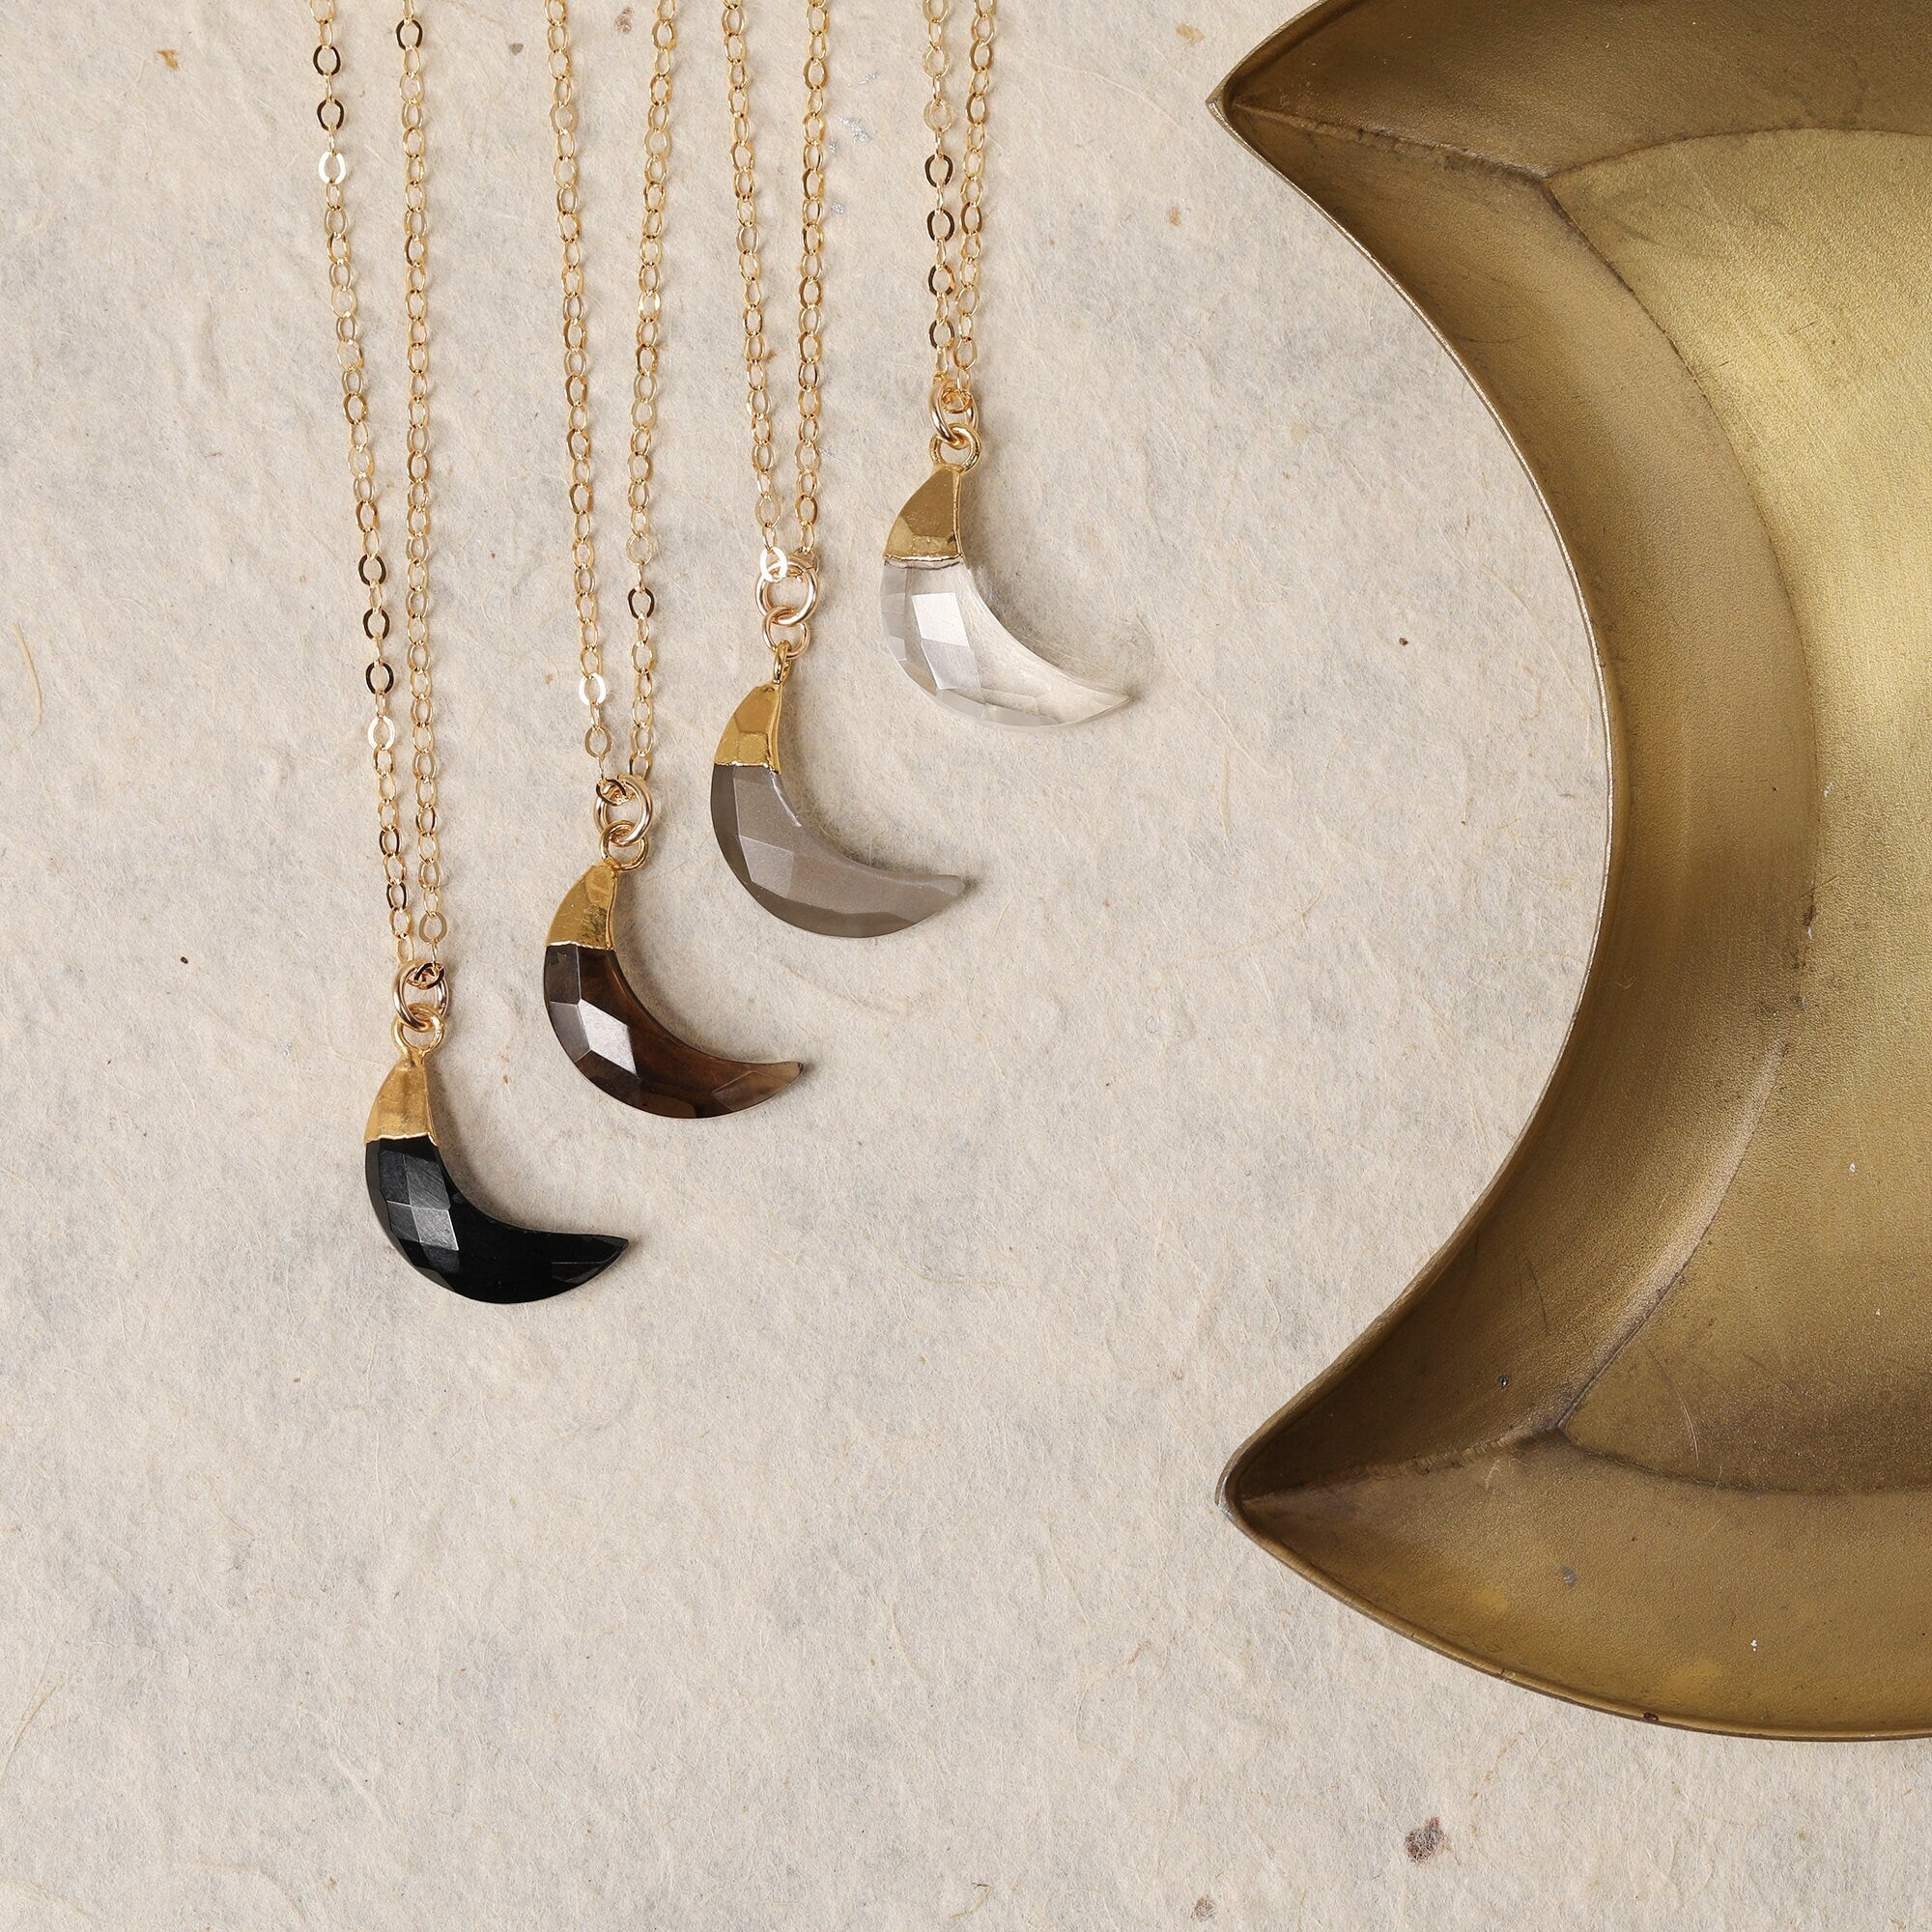 Moon Shape Gemstone Gold Necklaces: Onyx, Smokey, Moonstone and Quartz Necklaces Soul & Little Rose   